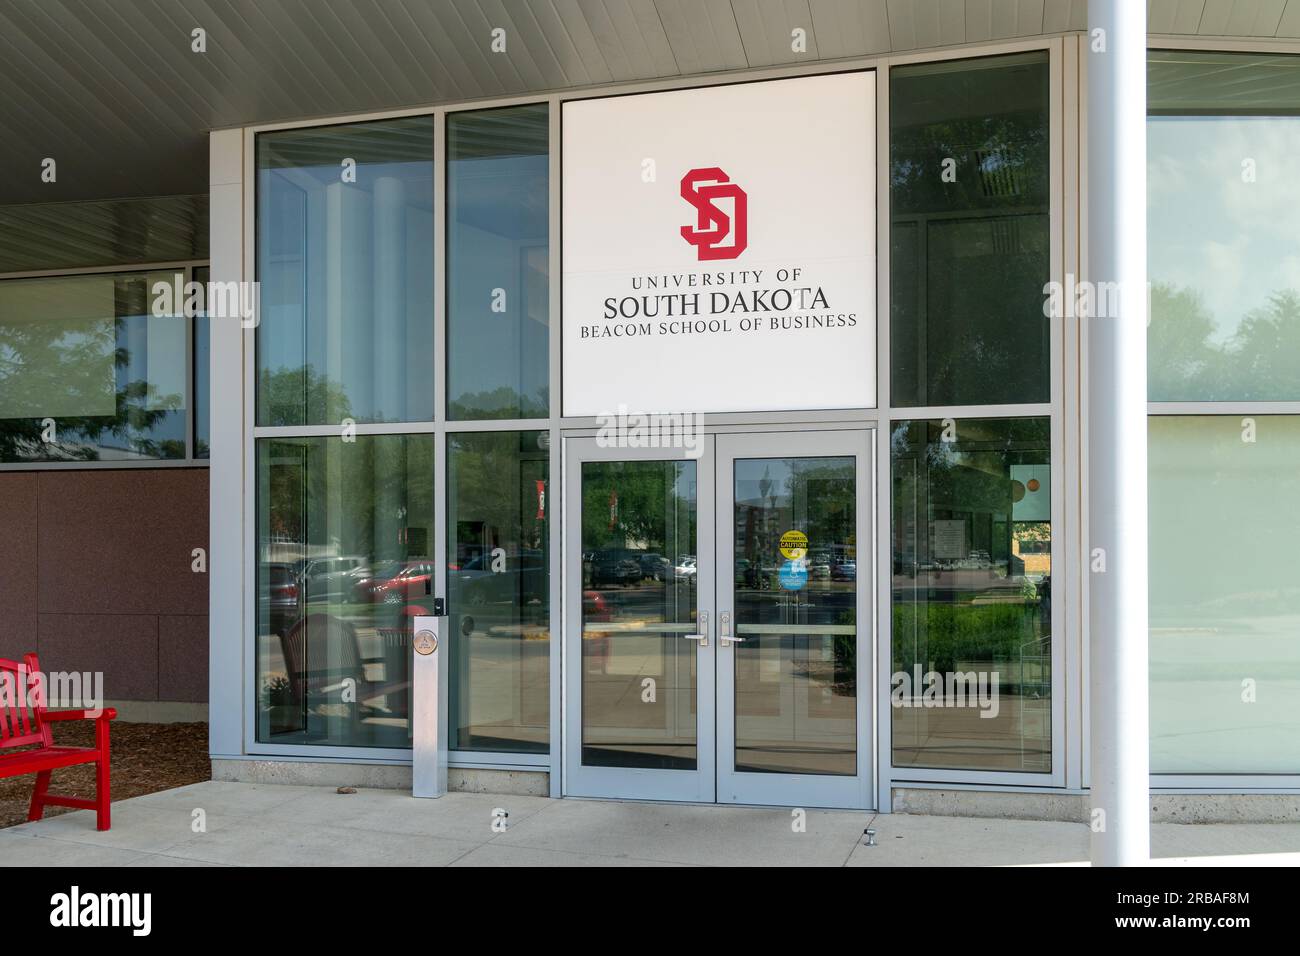 VERMILLION, SD, USA - 22. JUNI 2023:Beacom School of Business auf dem Campus der University of South Dakota. Stockfoto